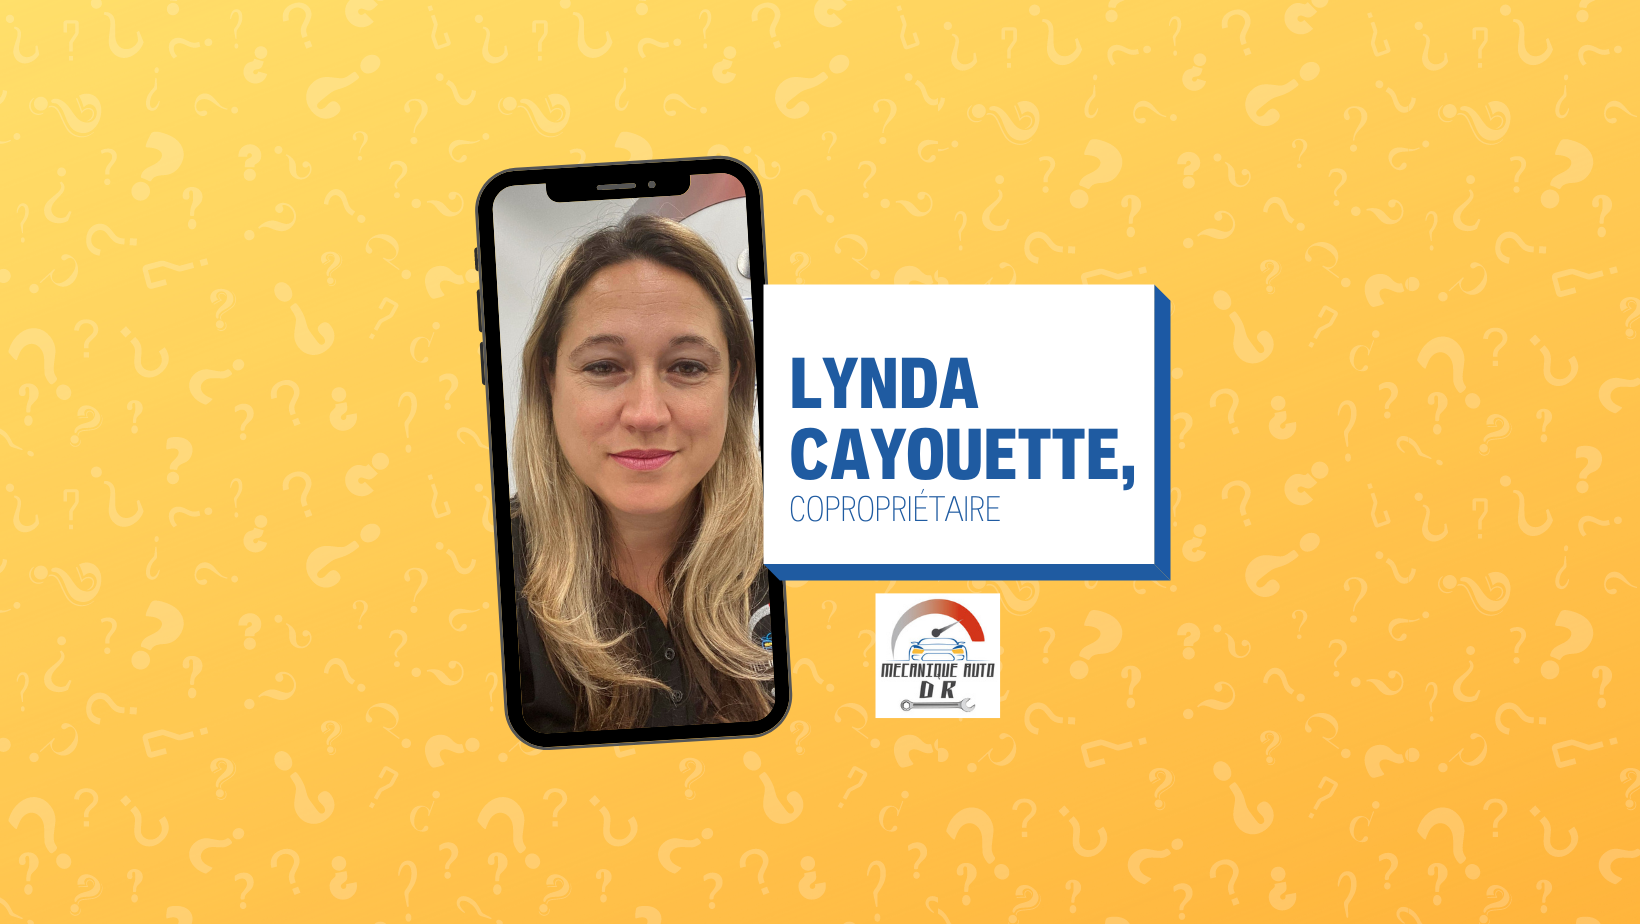 Lynda Cayouette, copropriétaire, en 10 questions!